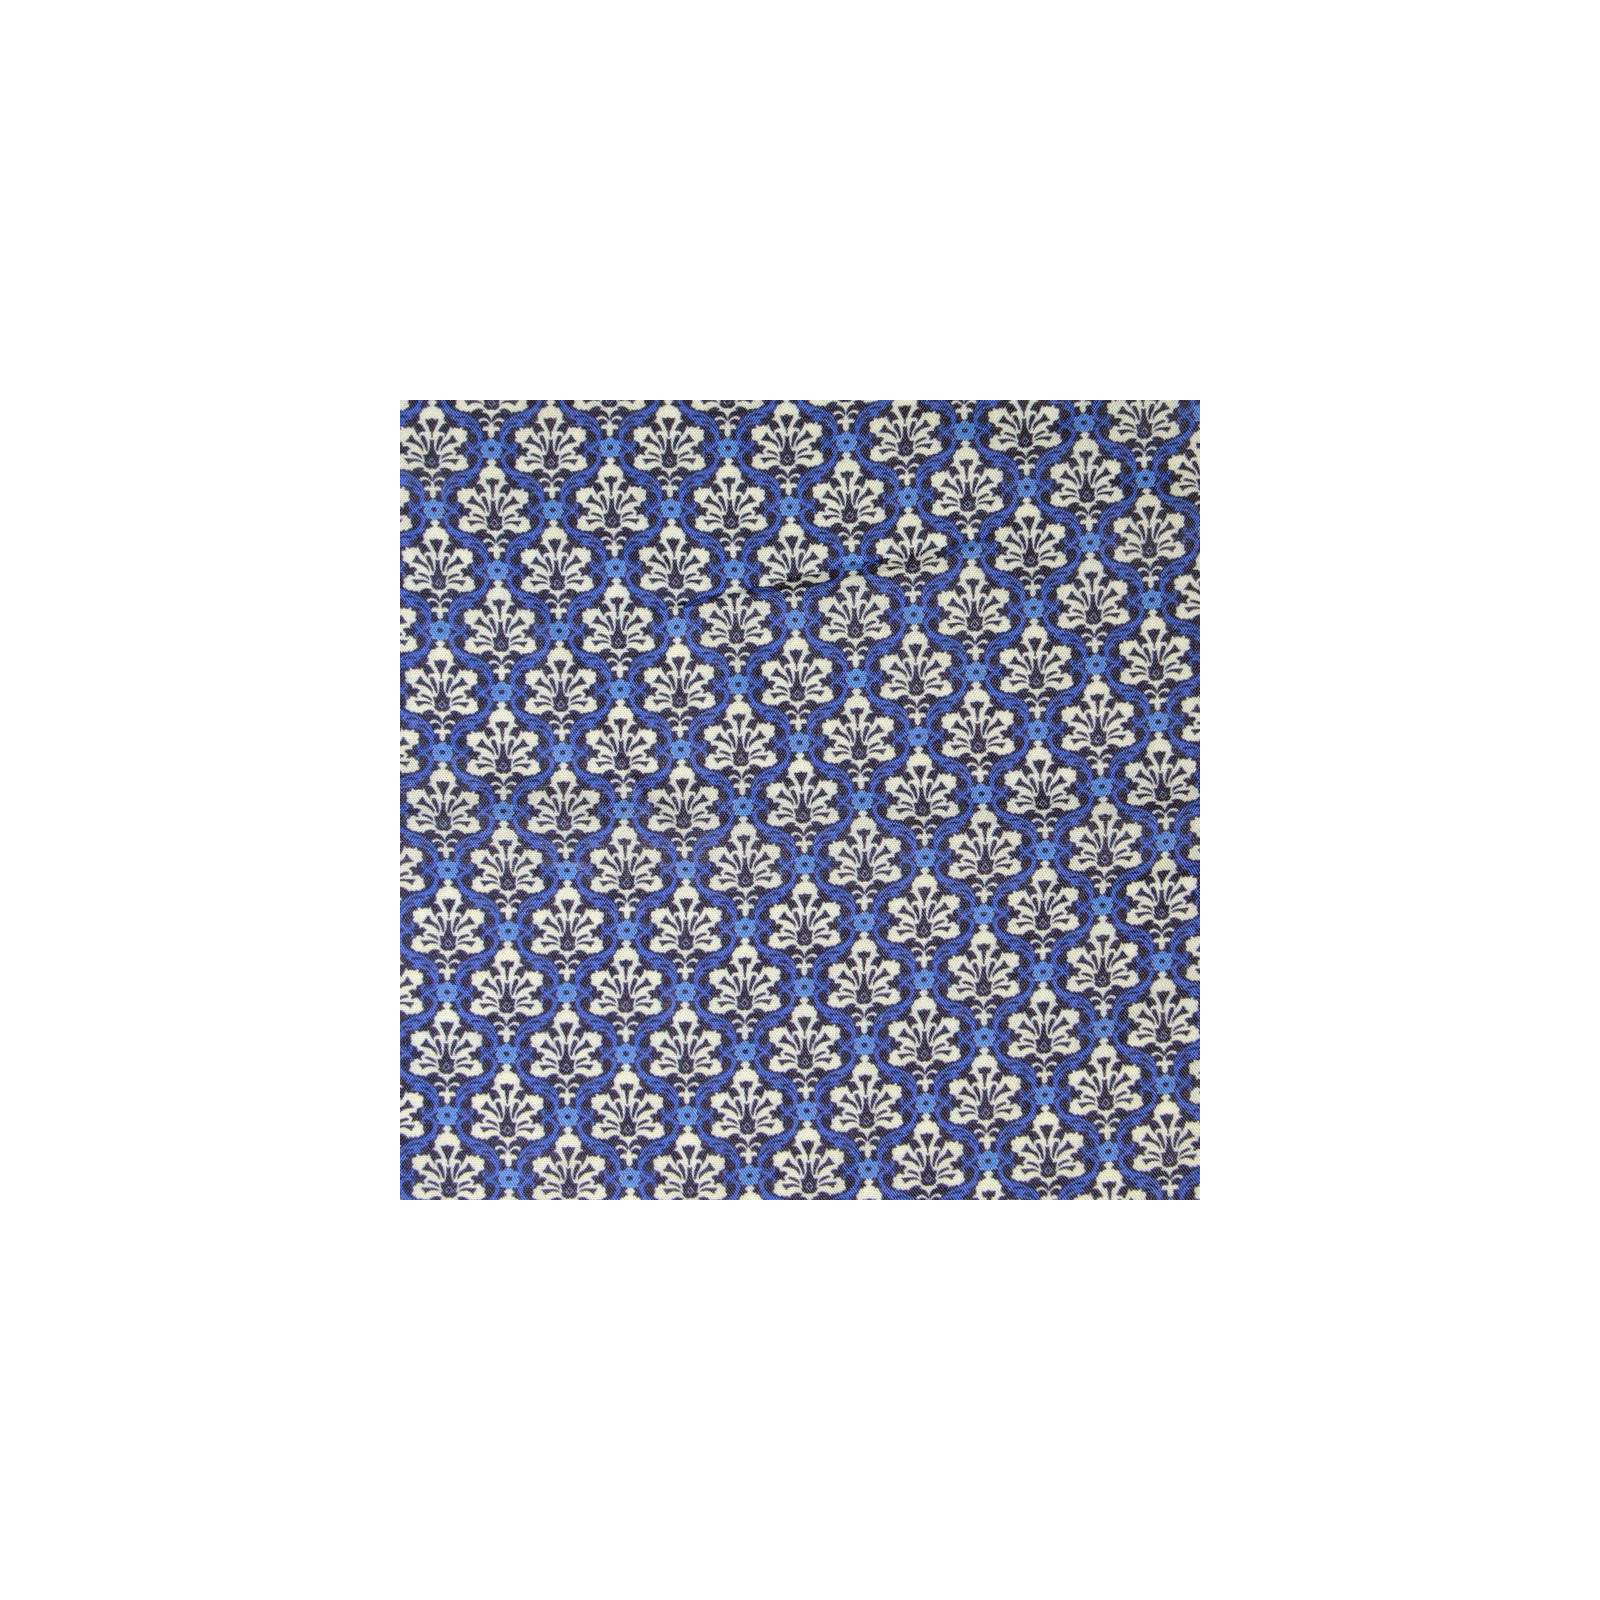 Tissu Viscose imprimé motifs baroque bleus et blancs